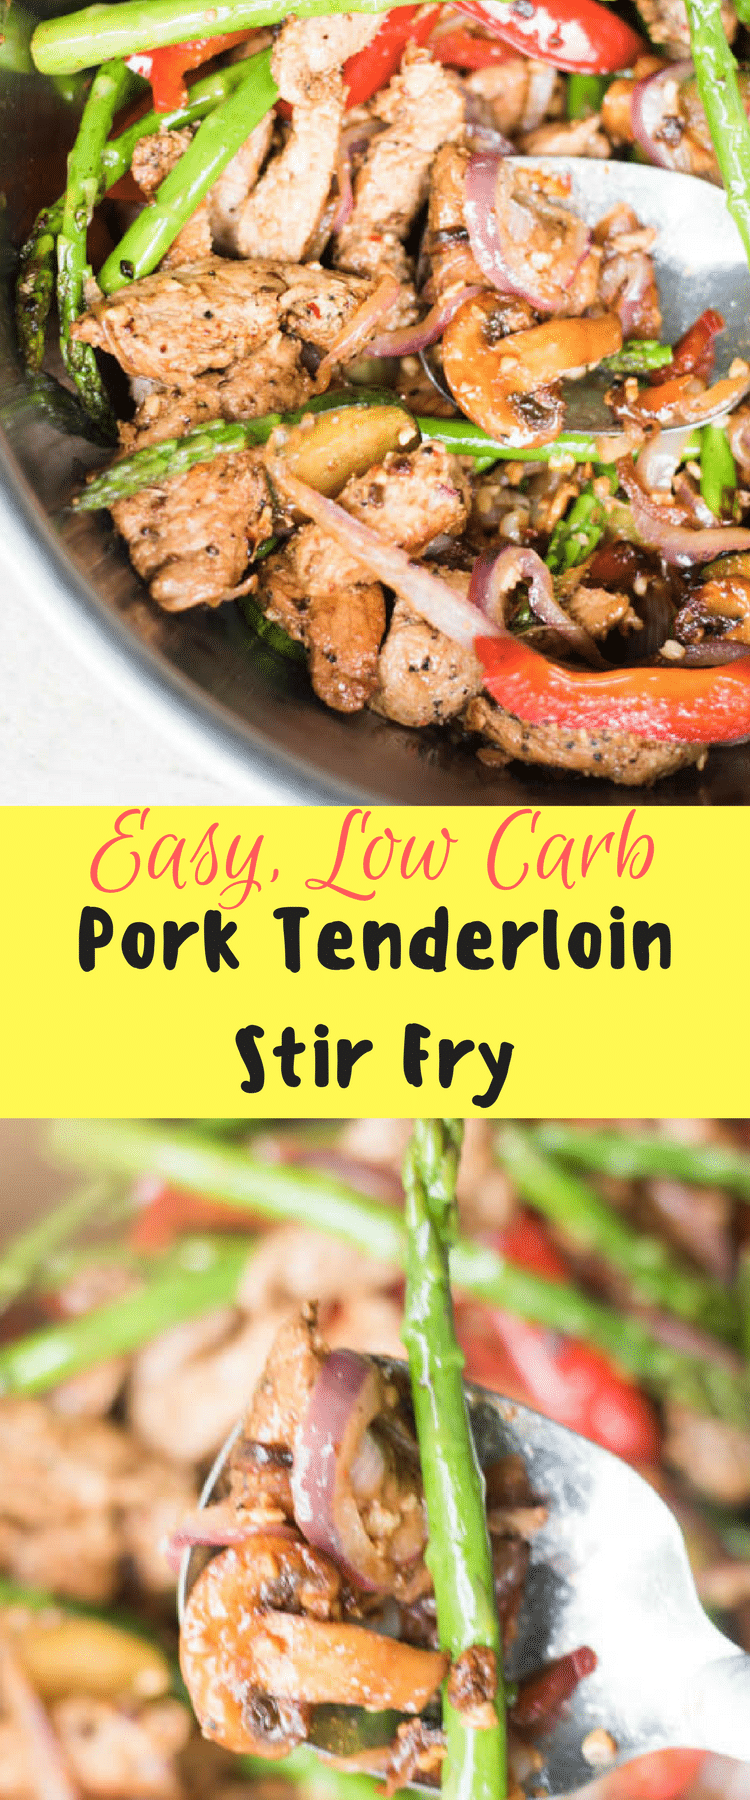 Easy Low Carb Pork Stir Fry with Veggies / Easy Stir Fry / Pork Stir Fry / Pork Recipes / Pork Tenderloin / Gluten Free Stir Fry / Low Carb Stir Fry